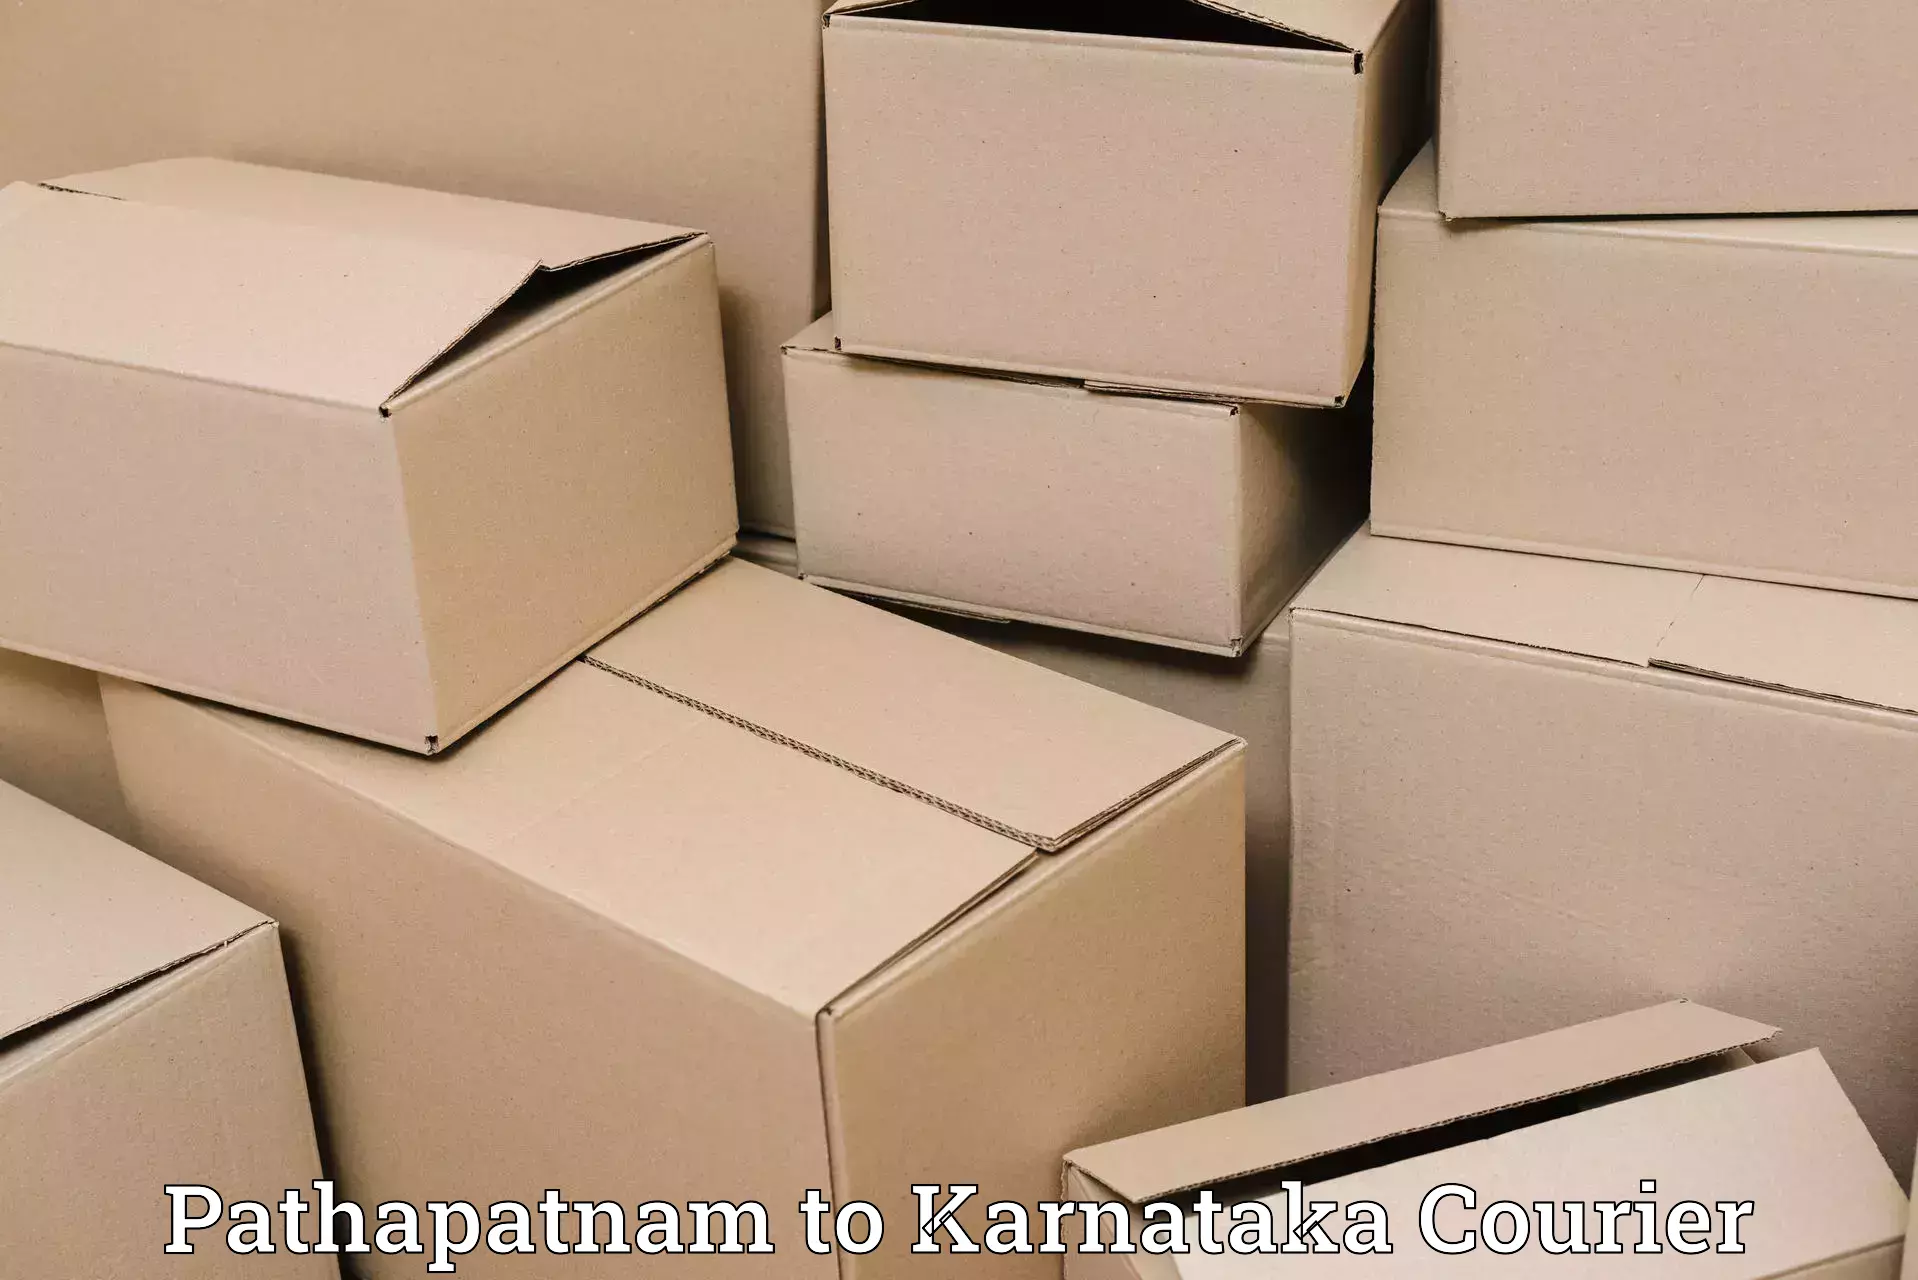 Supply chain efficiency in Pathapatnam to Kanjarakatte